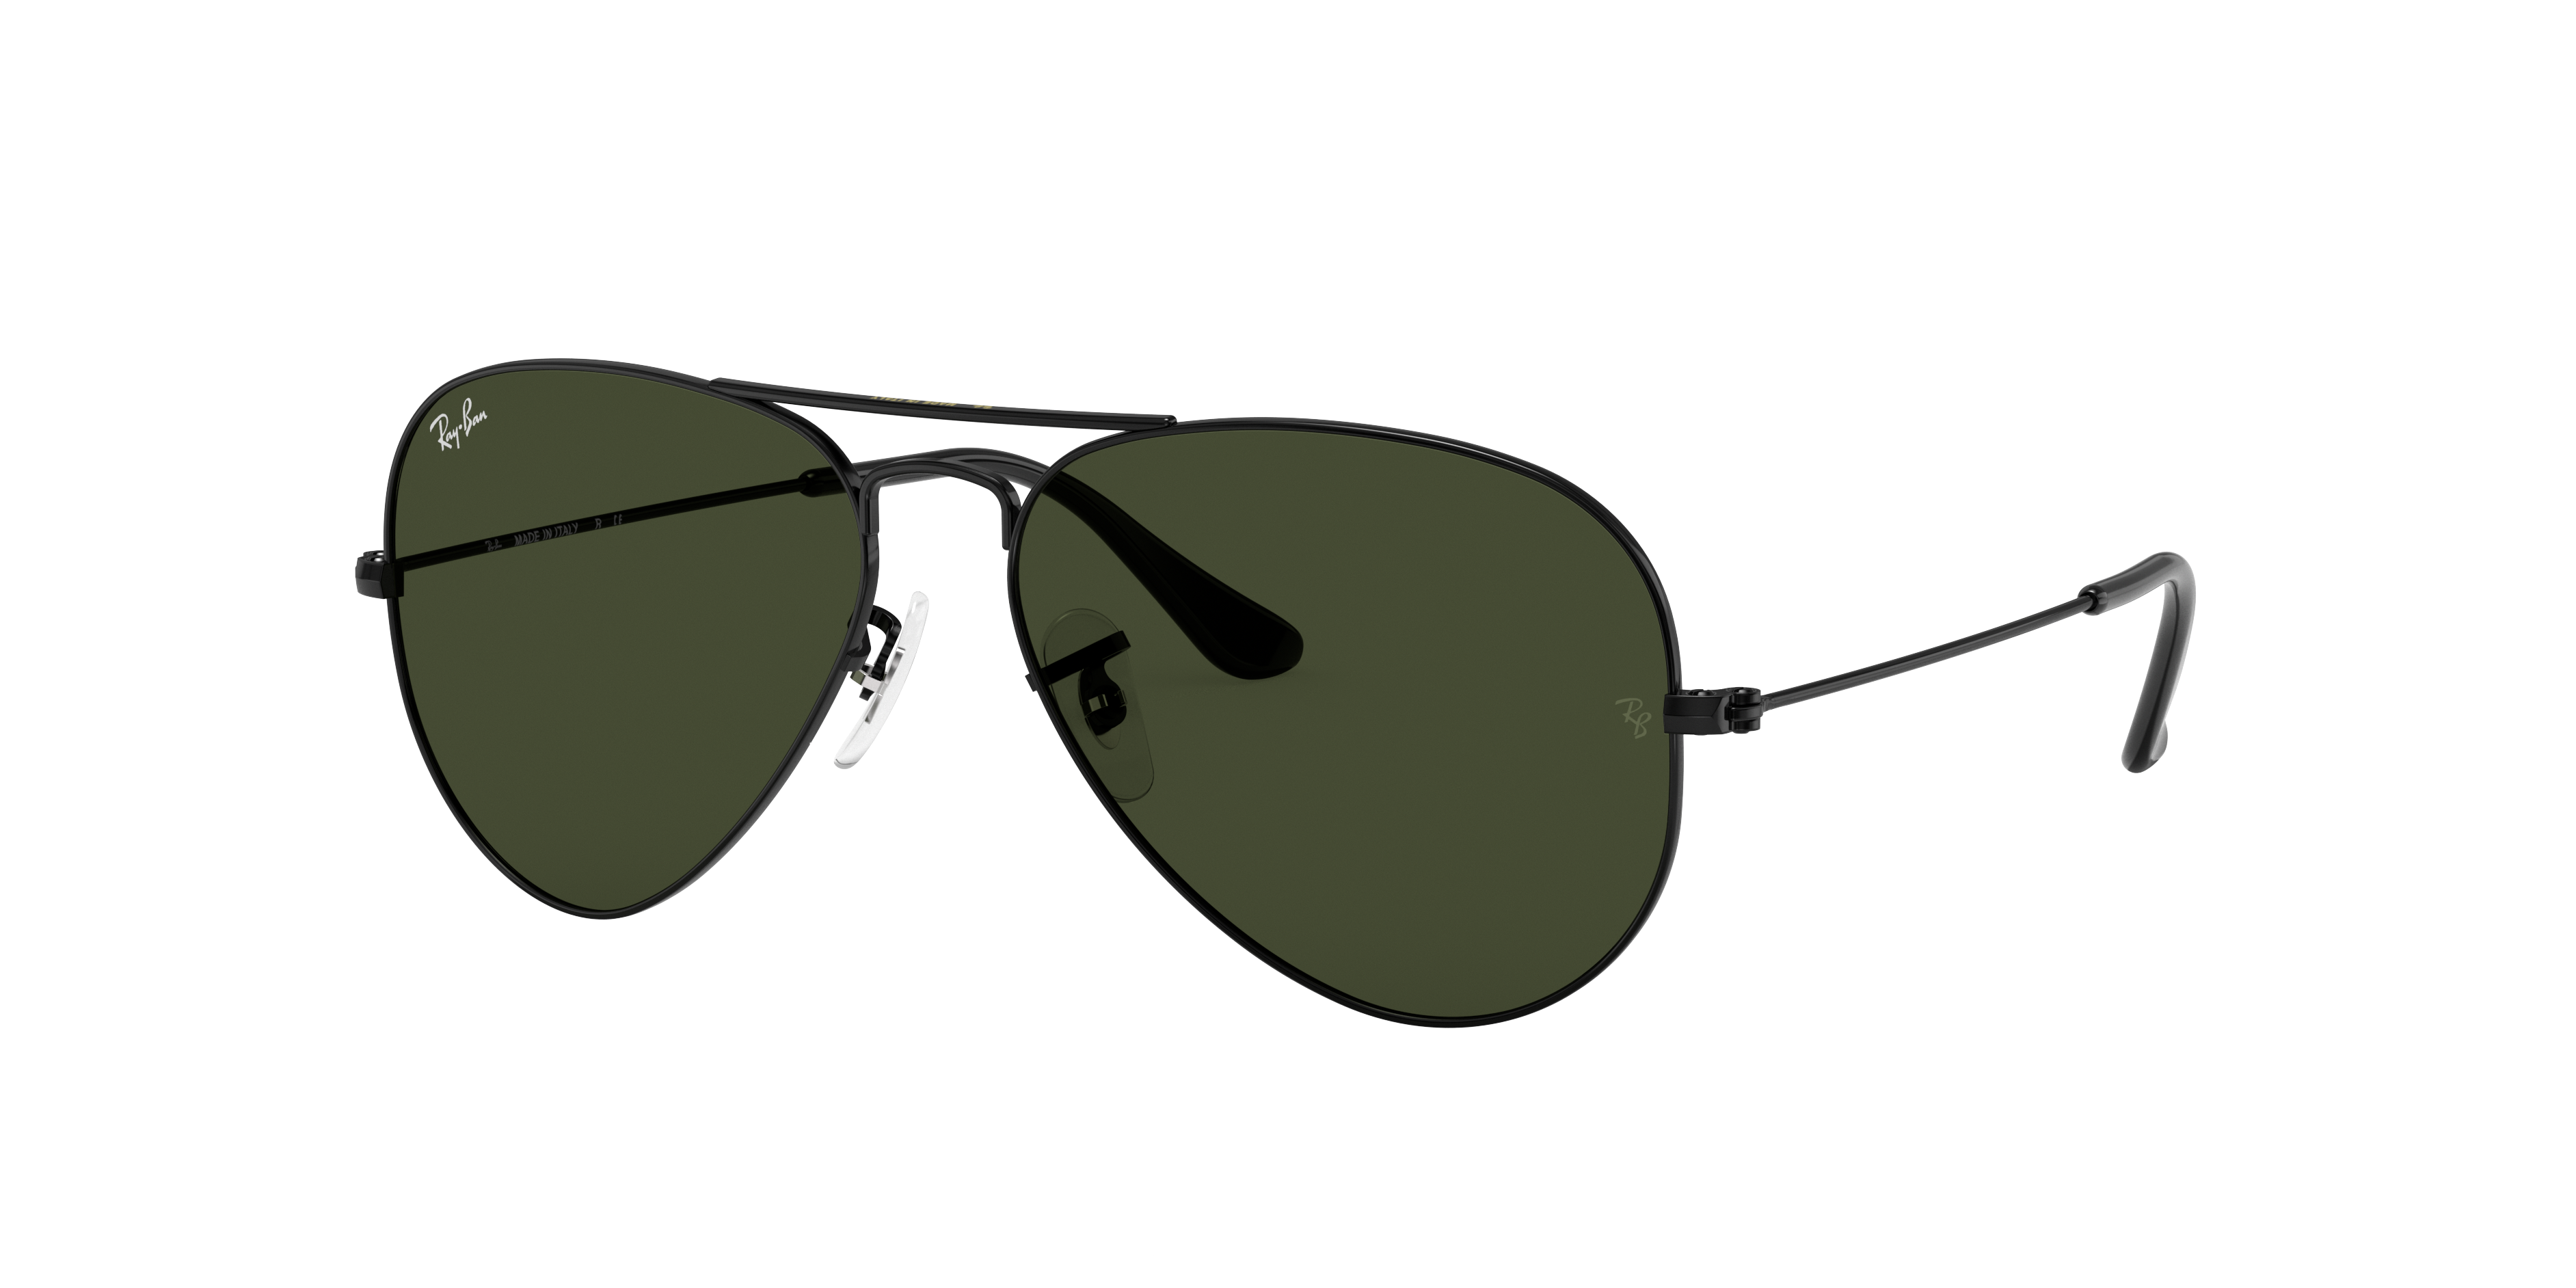 Ren Cirkel Fremsyn Aviator Classic Sunglasses in Black and Green | Ray-Ban®